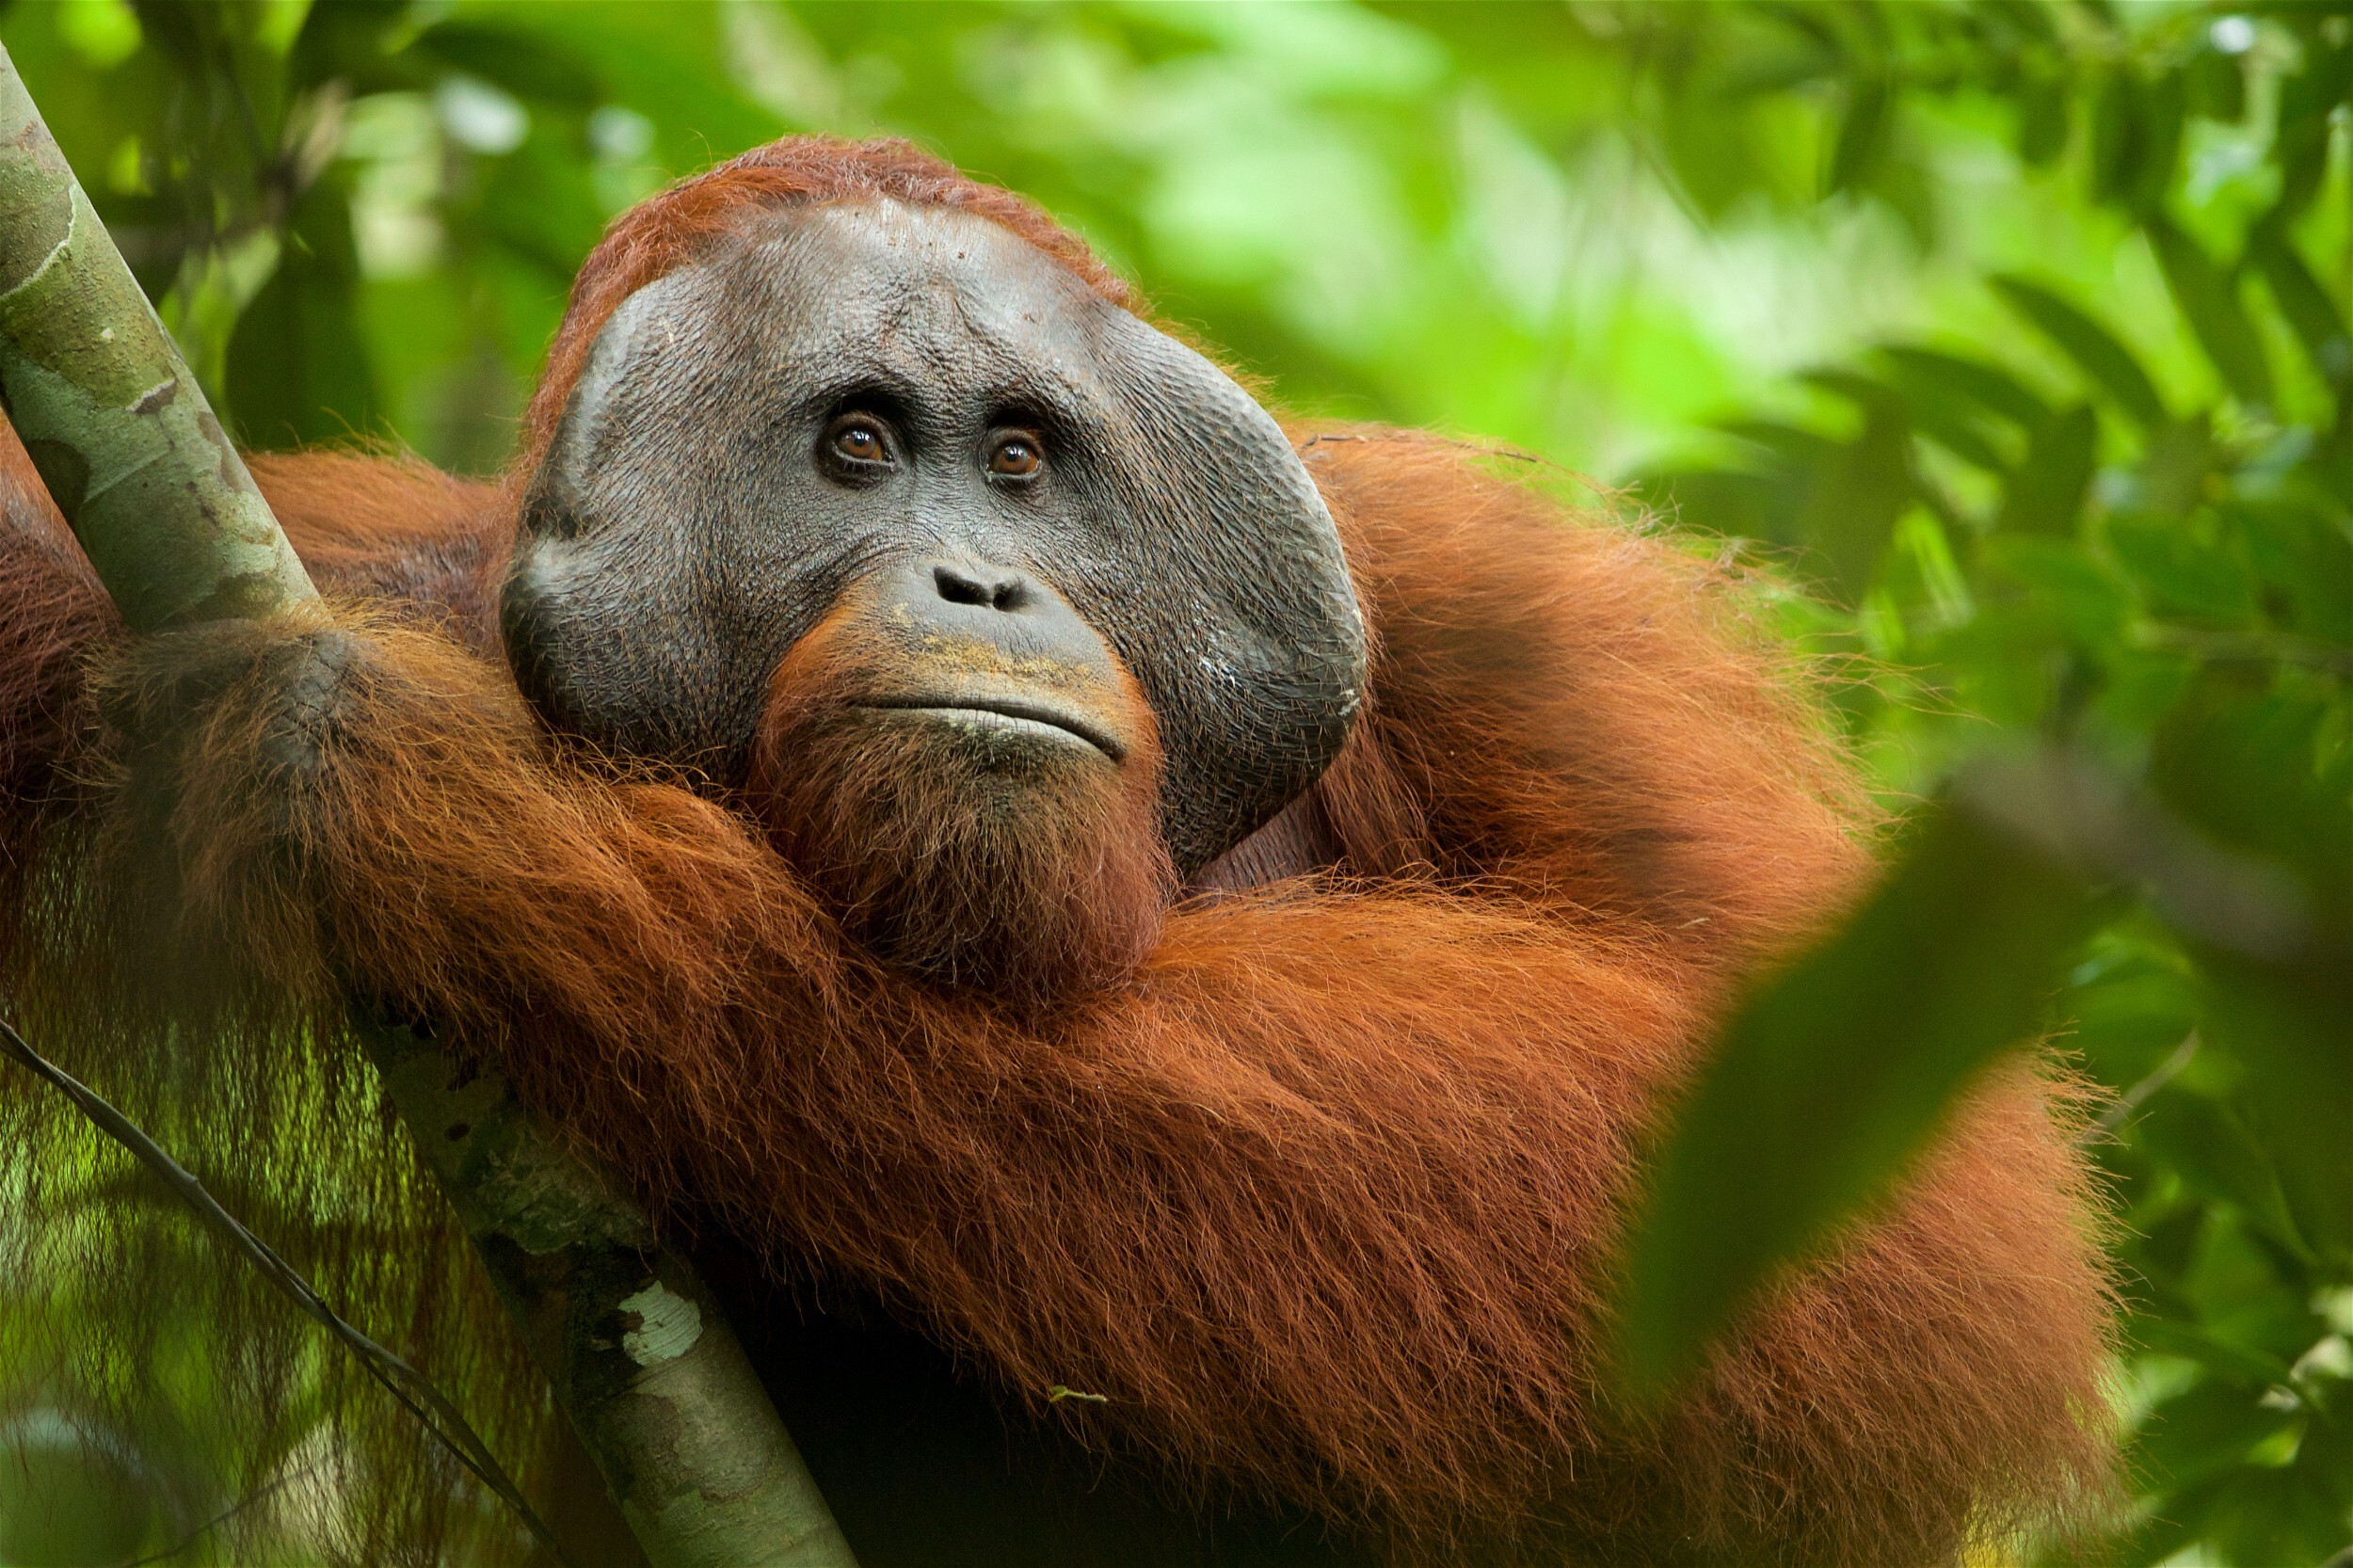 Bornean orangutan, Gunung Palung National Park, Indonesia. Photo: Tim Laman